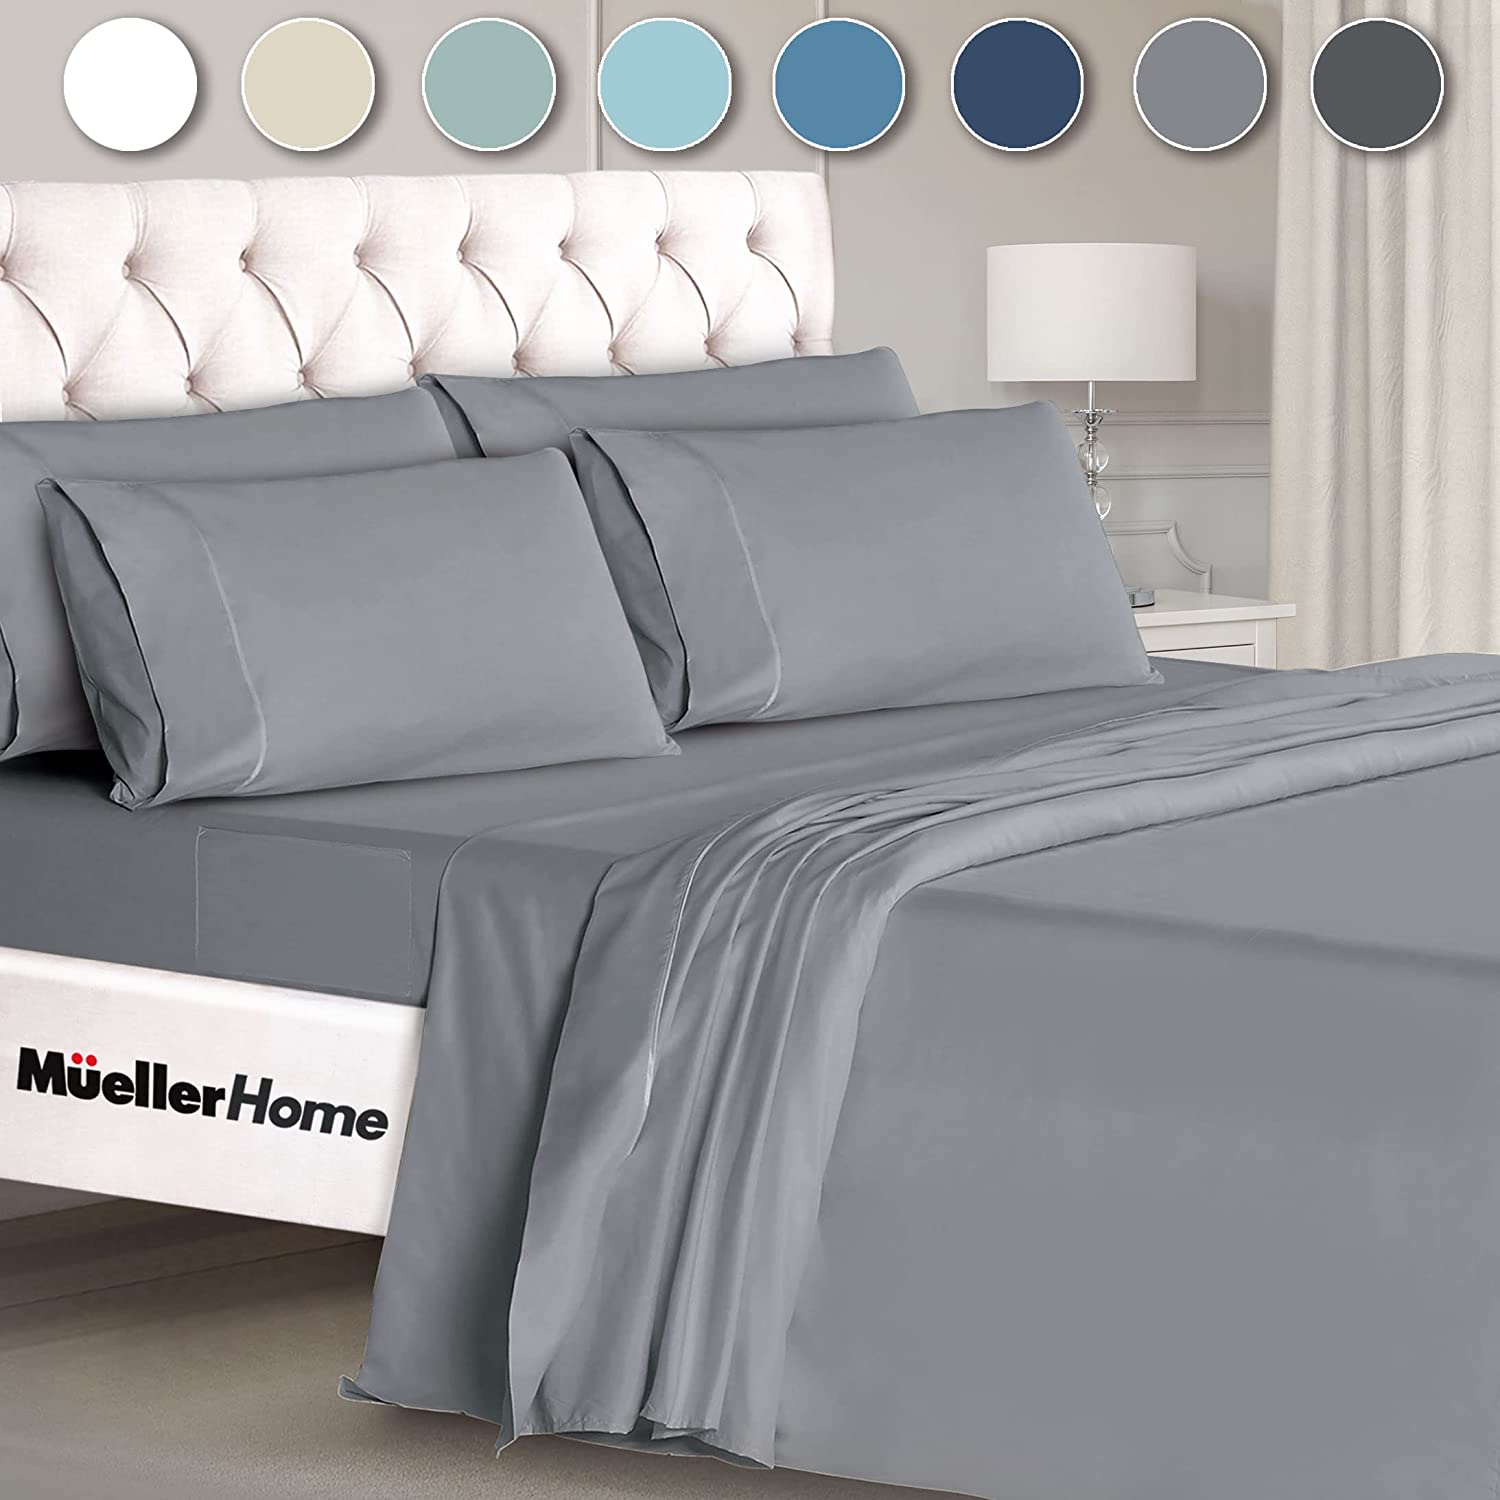 https://muellerhome.us/wp-content/uploads/2021/04/muellerhome_Premium-Hotel-Collection-6-Piece-QUEEN-Sheet-Set-Light-Gray.jpg